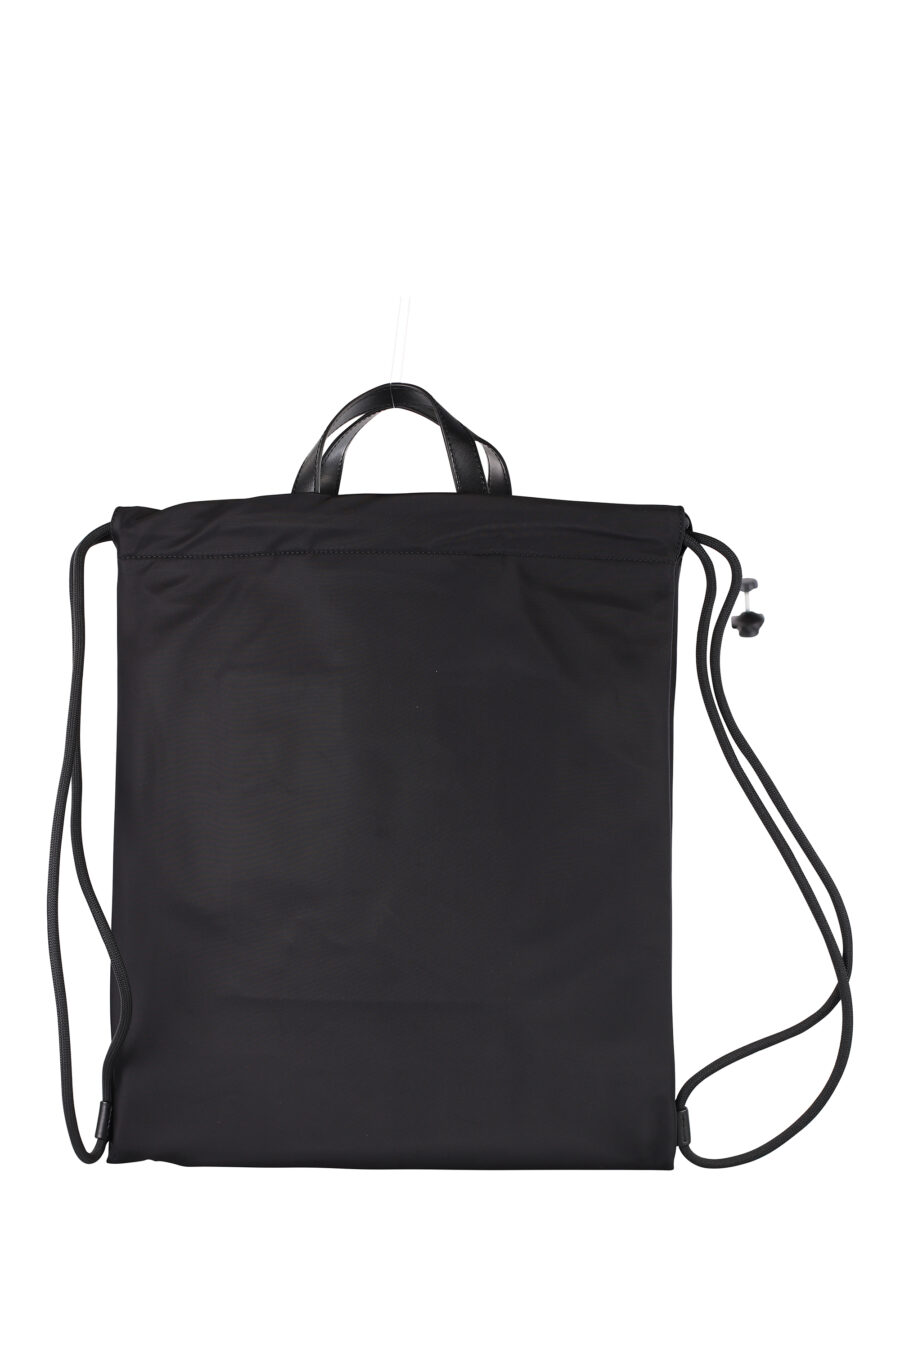 Black drawstring backpack with "icon" logo - IMG 1335